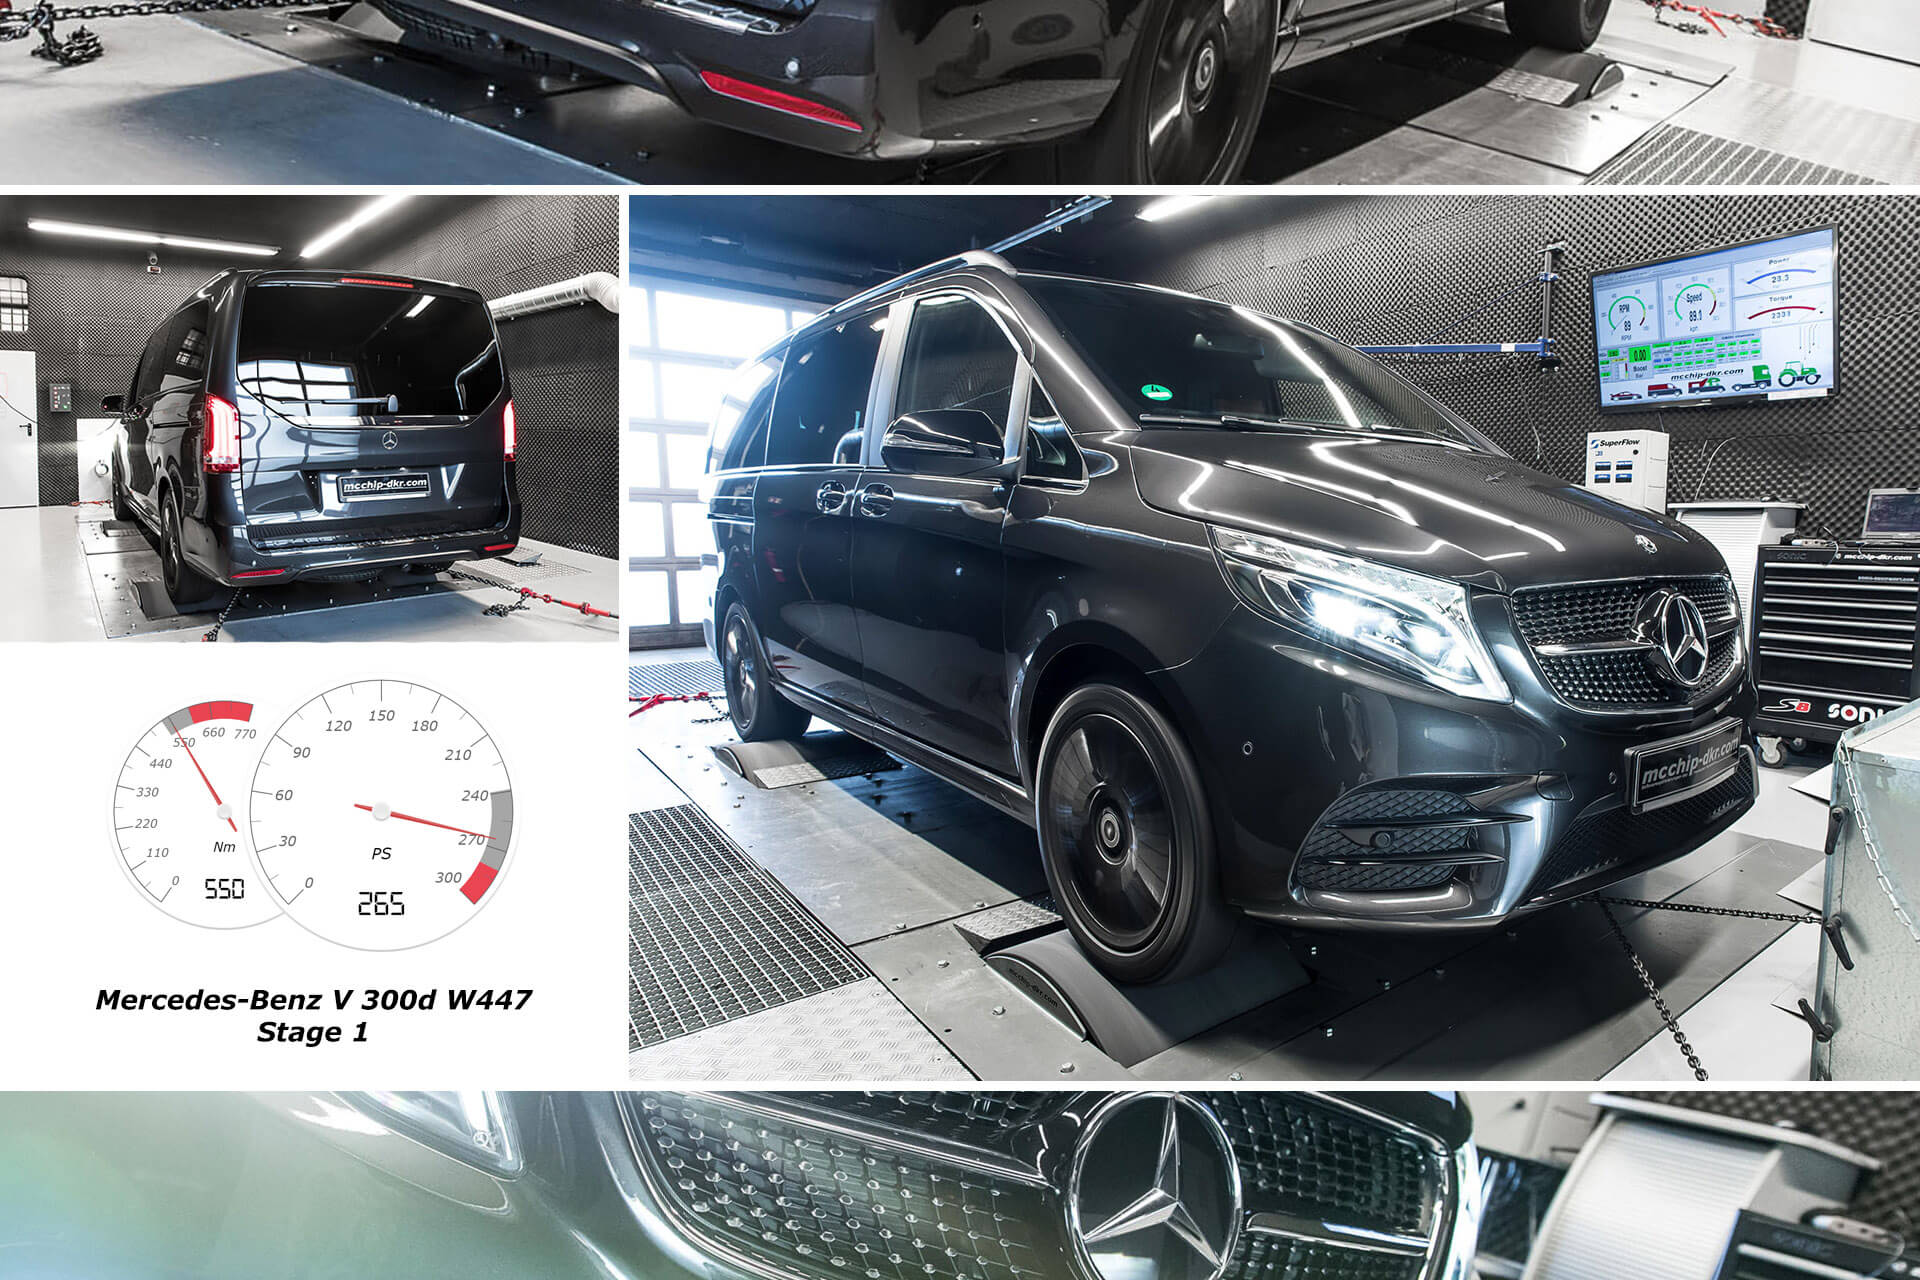 https://mcchip-dkr.com/images/content/news-2021/Chiptuning_News_Mercedes-Benz_V300d.jpg